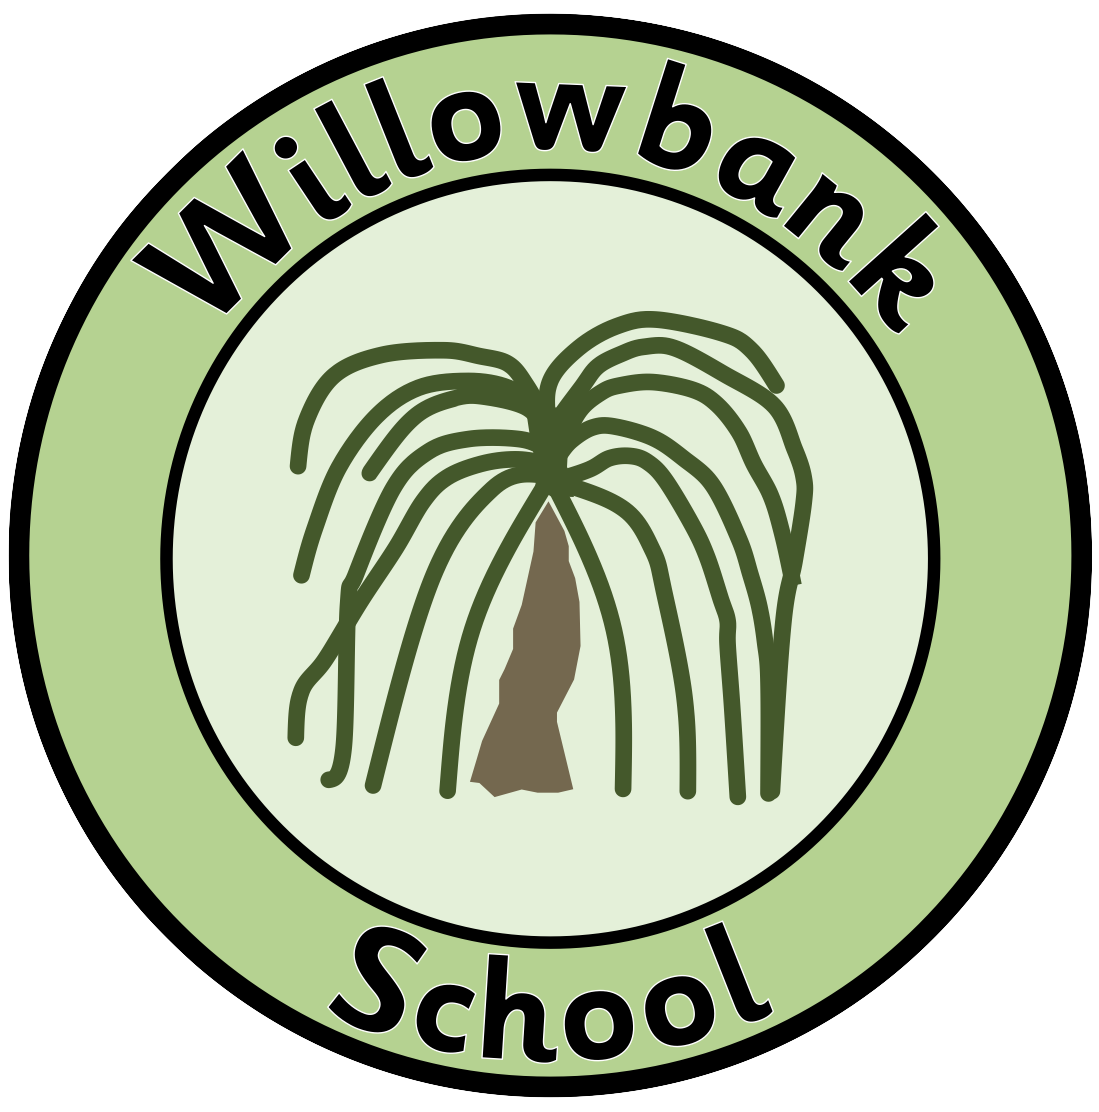 Willowbank School, Kilmarnock